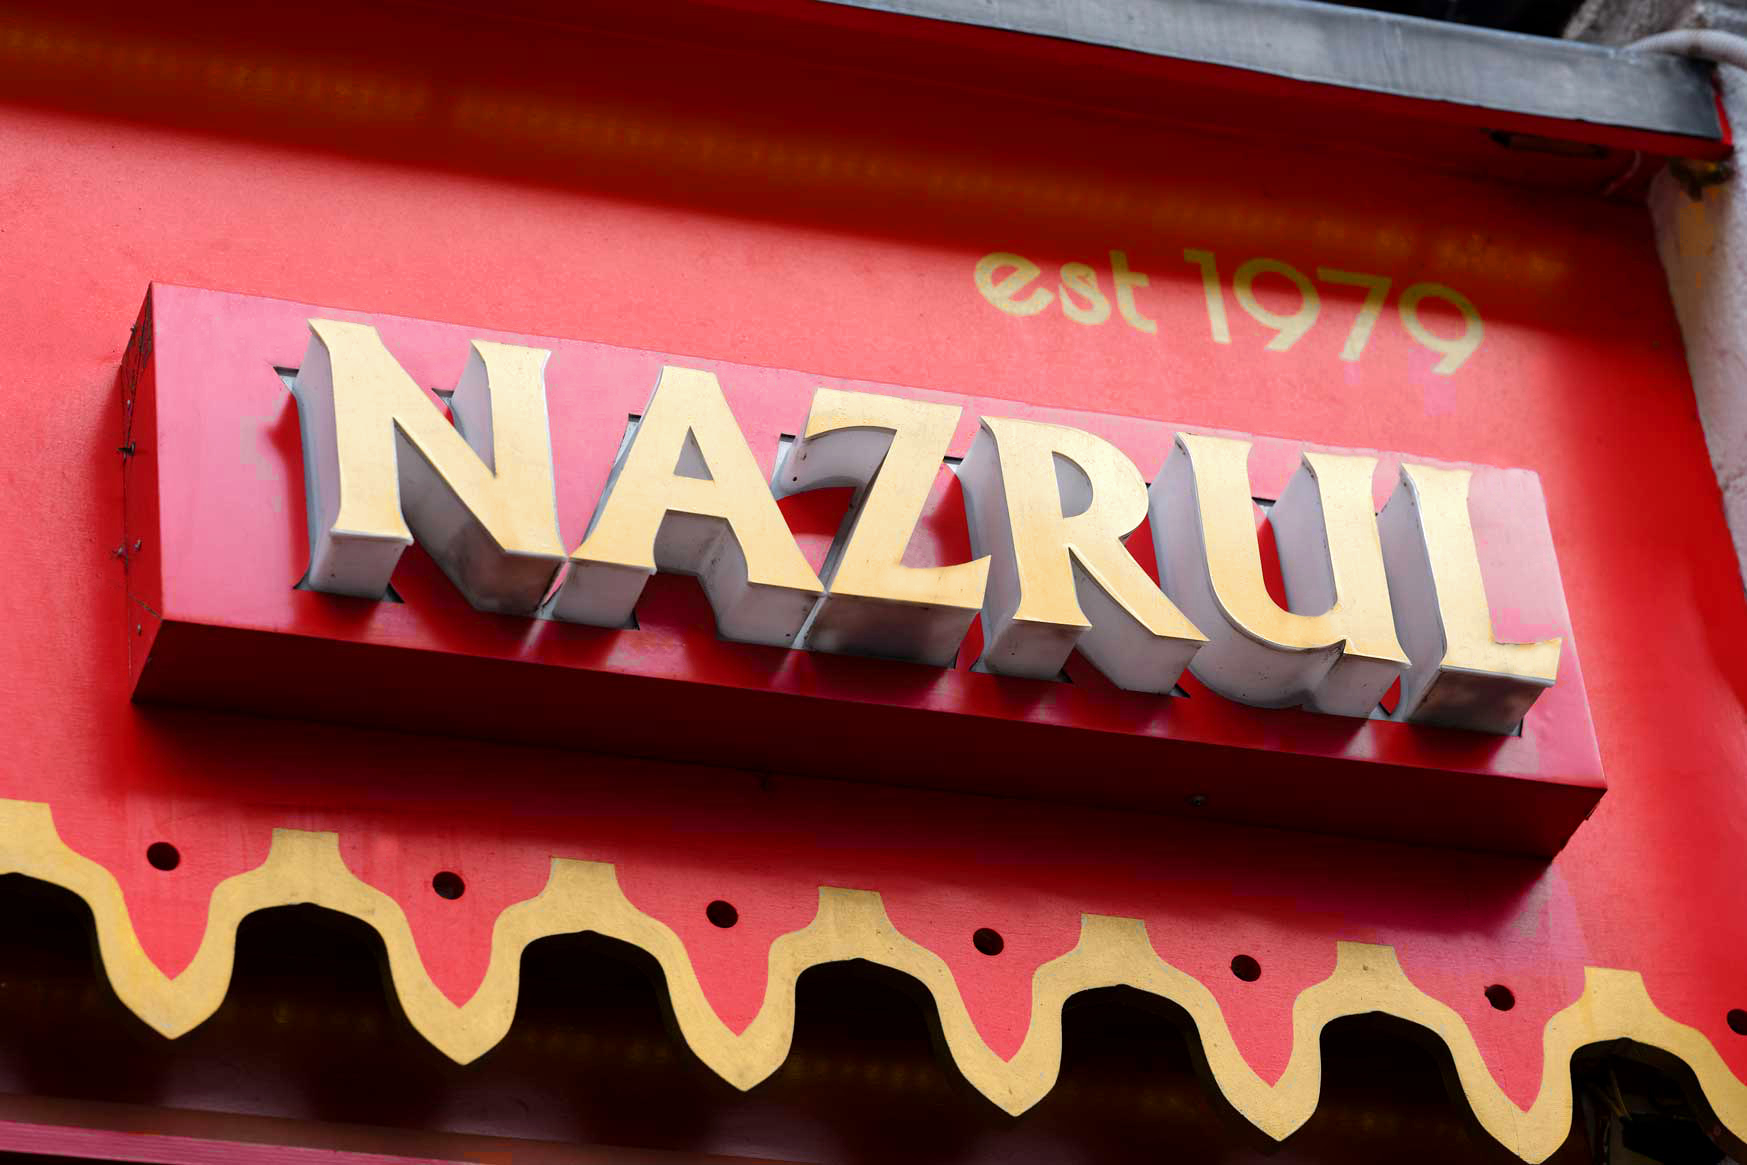 Nazrul restaurant, Brick Lane, East End of London.